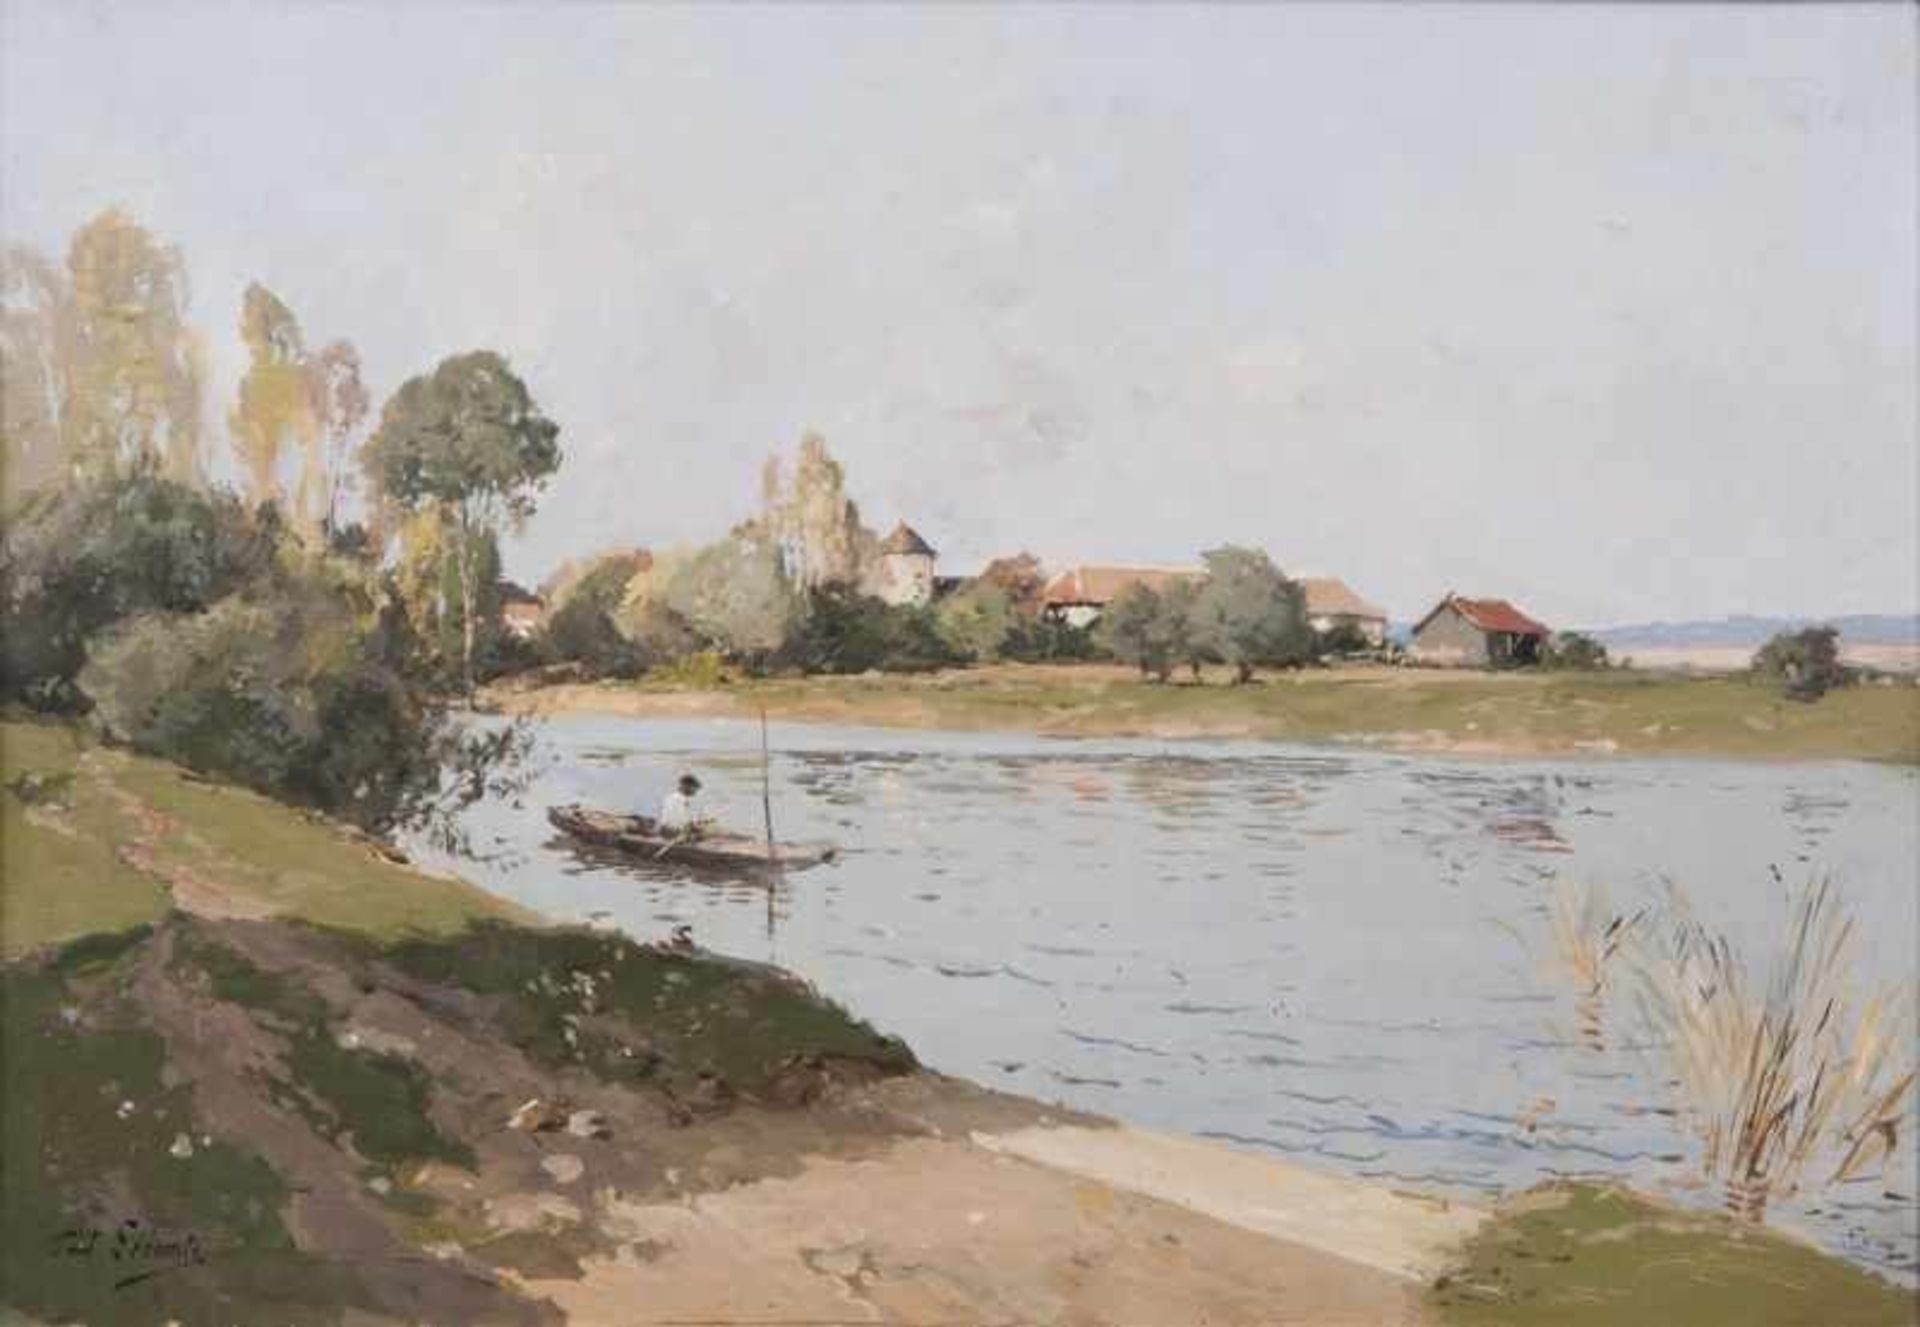 Paul Lecomte (Paris 1842 - Paris 1920) Angler auf dem Fluß Öl/Lw., 38 x 55 cm, l. u. sign. Paul